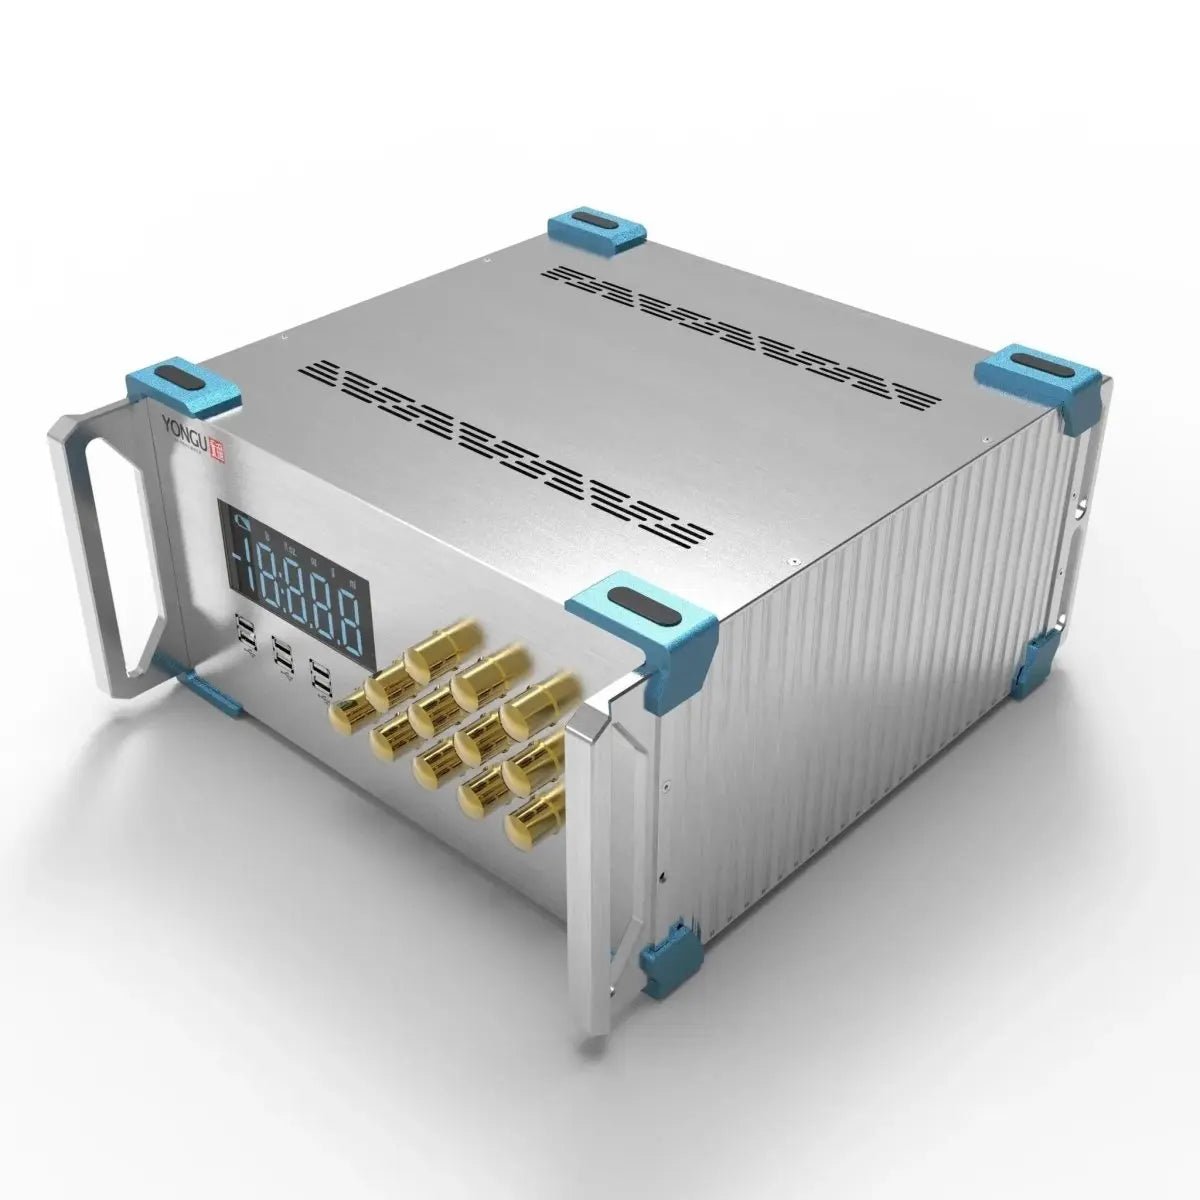 Generator Enclosure Box -B08 - Yongu Case